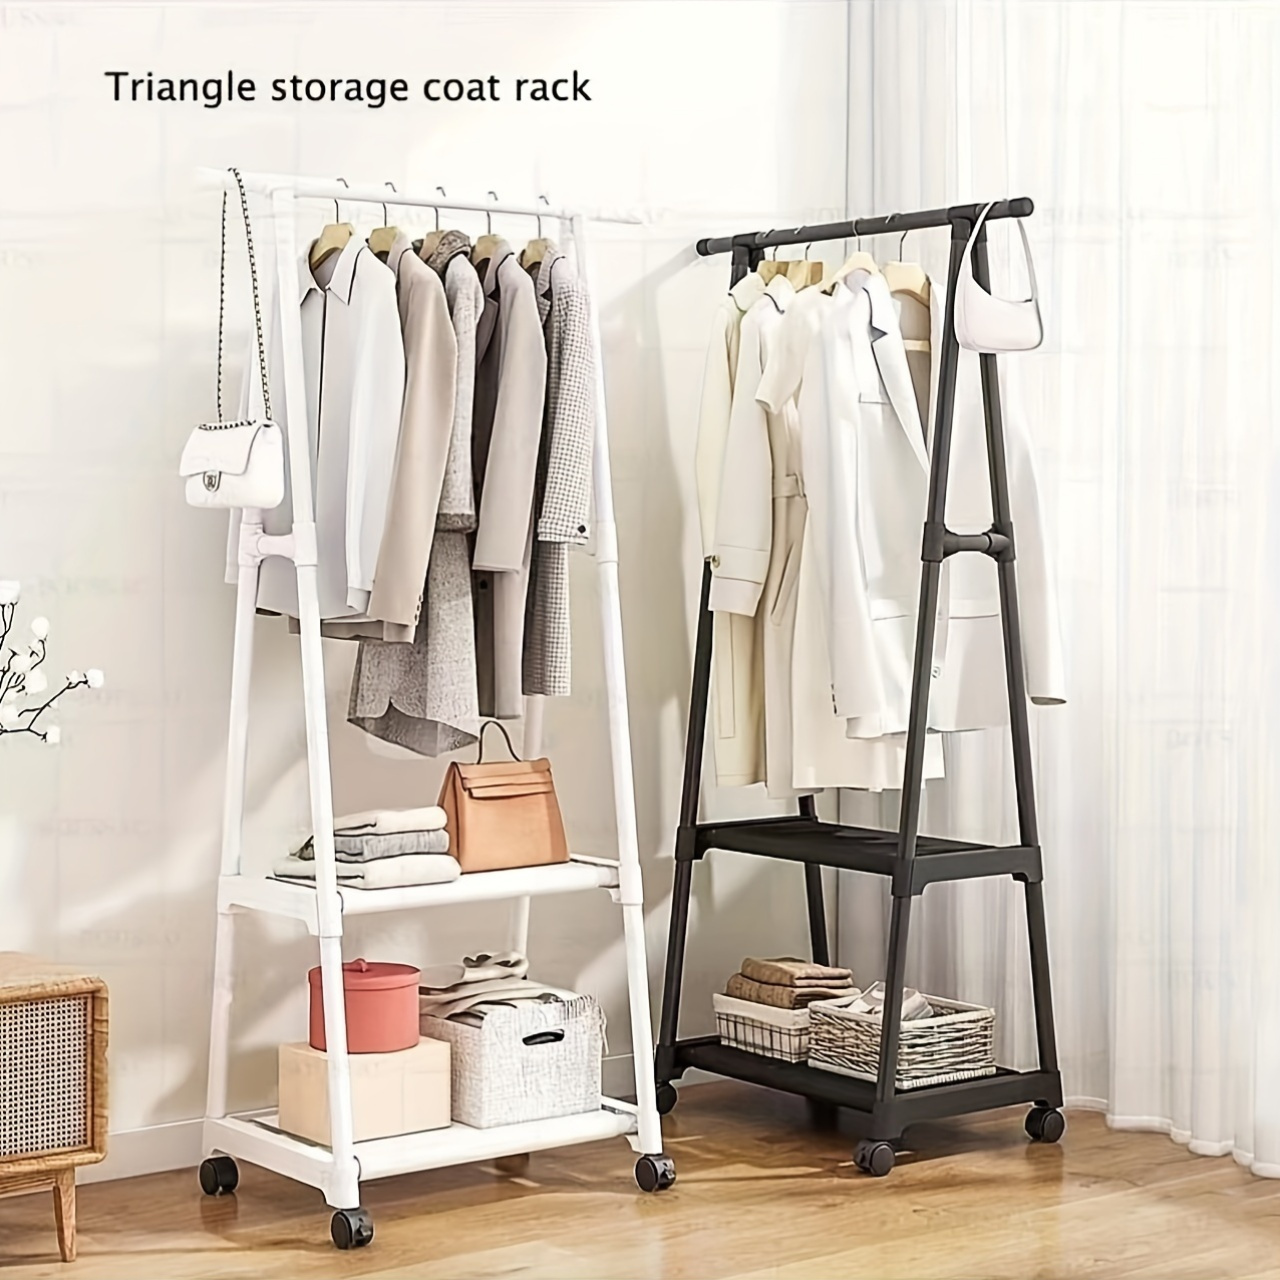 

Ldq Triangle Coat Rack With 2 Shelves - Durable Metal & Plastic, Freestanding Garment Hanger For Home Organization